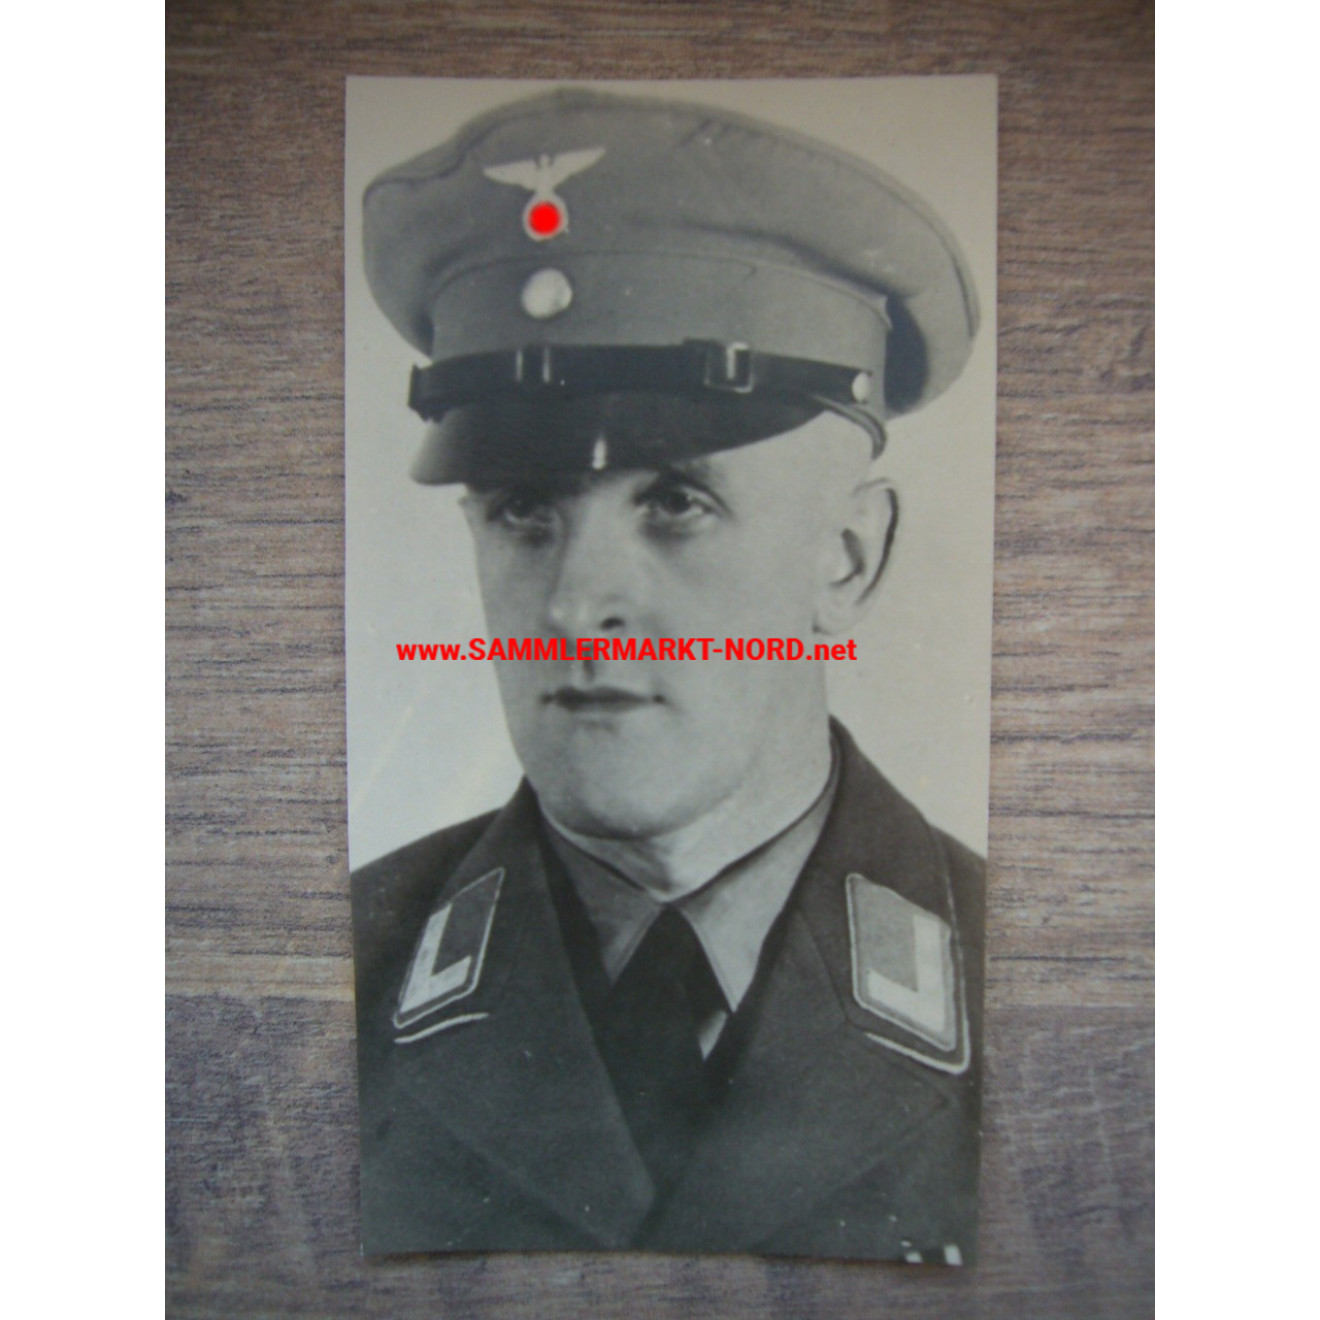 NSDAP head of office with visor cap